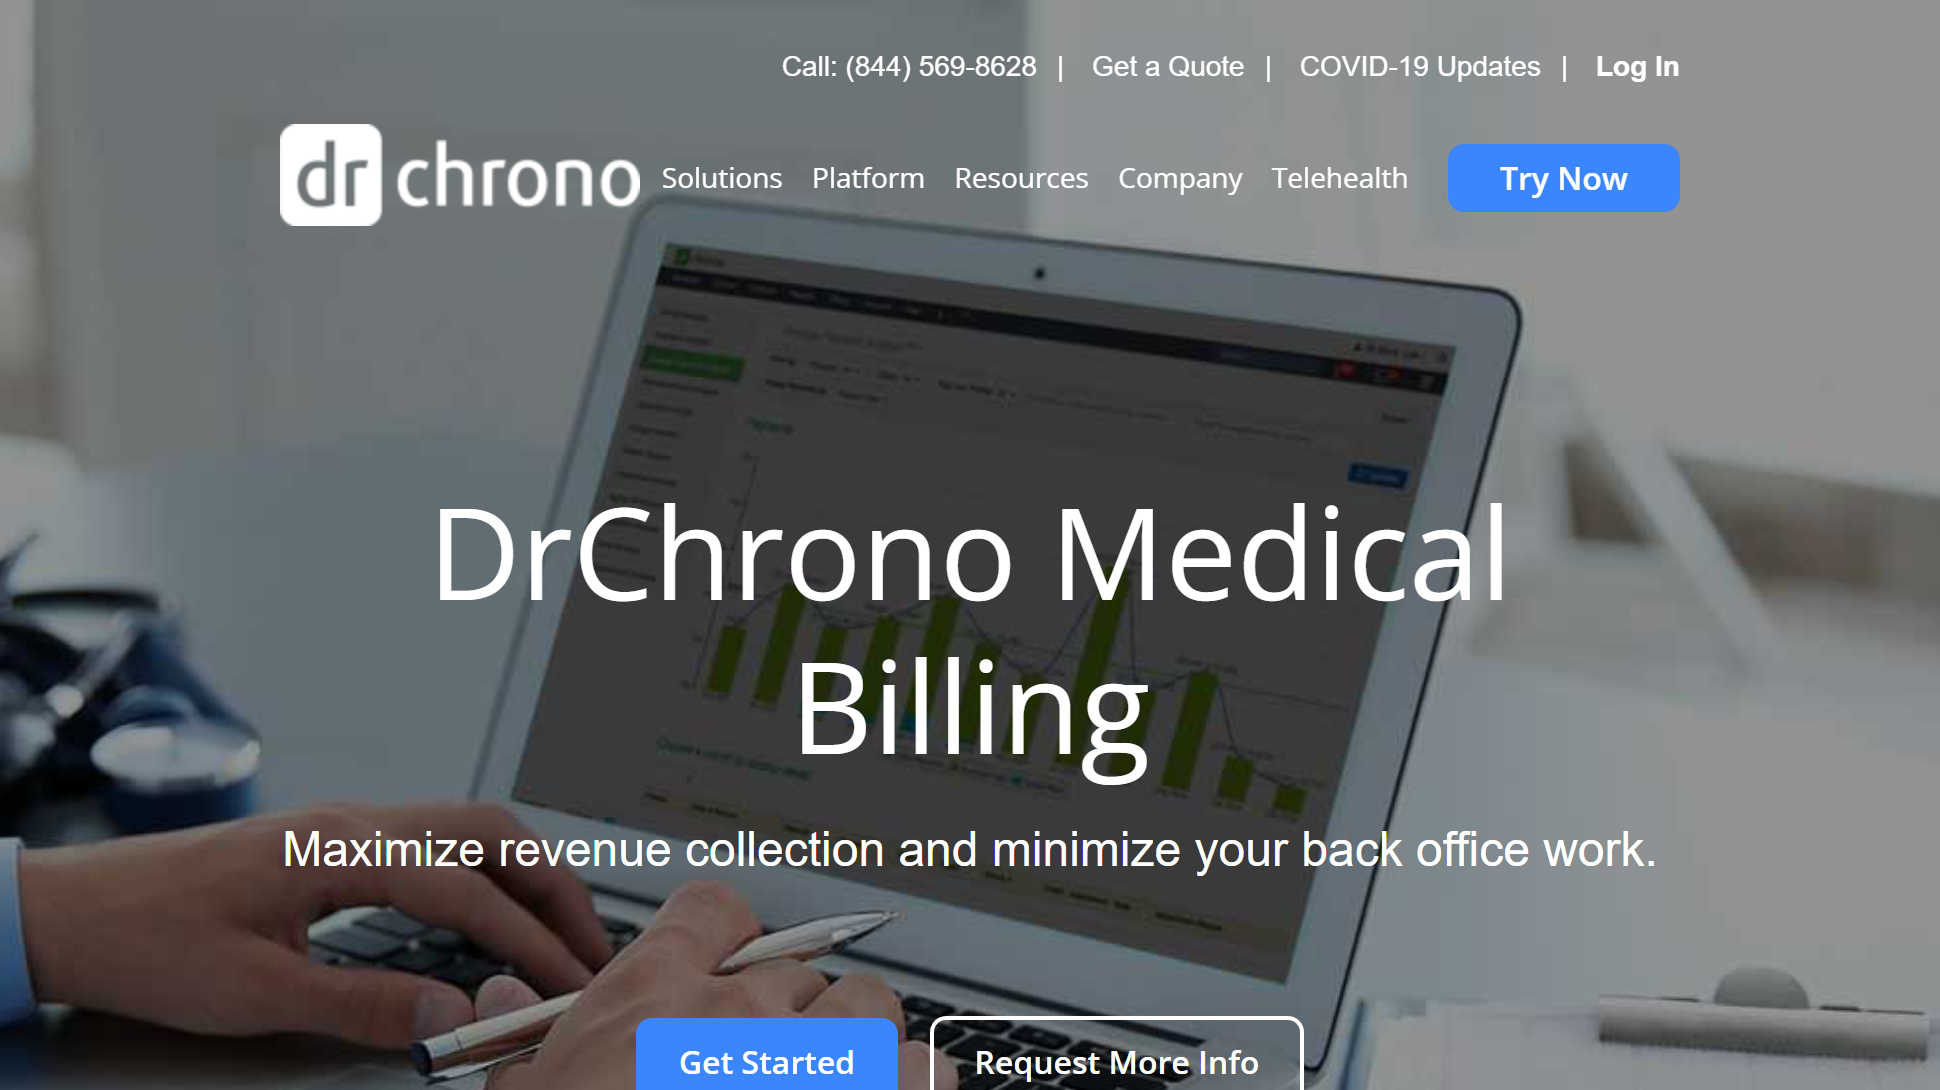 DrChrono Medical Billing website screenshot